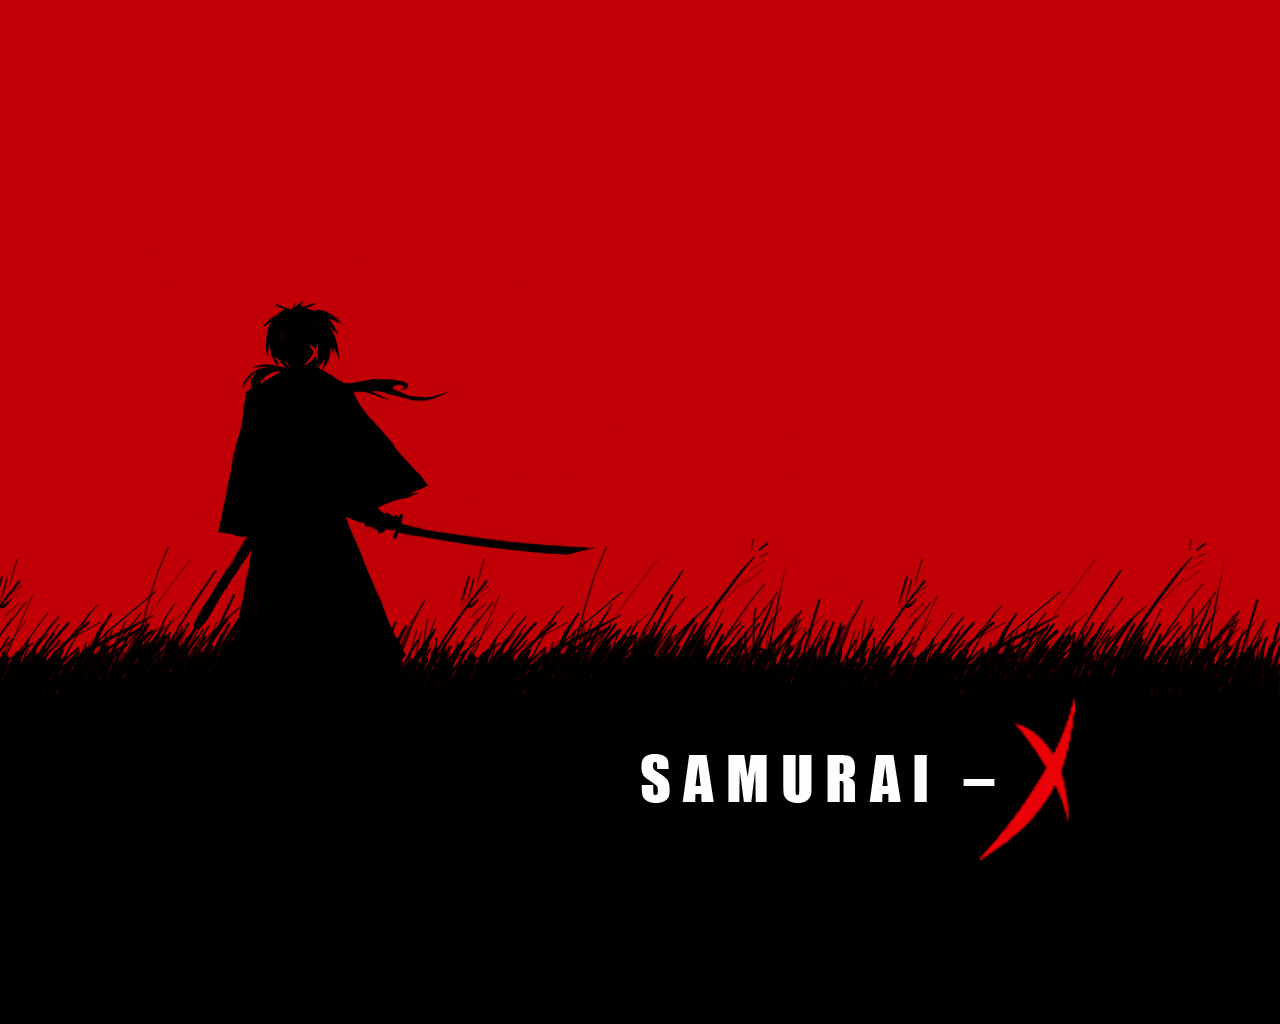 Download this Samurai Himura Kenshin Wallpaper And Friends picture